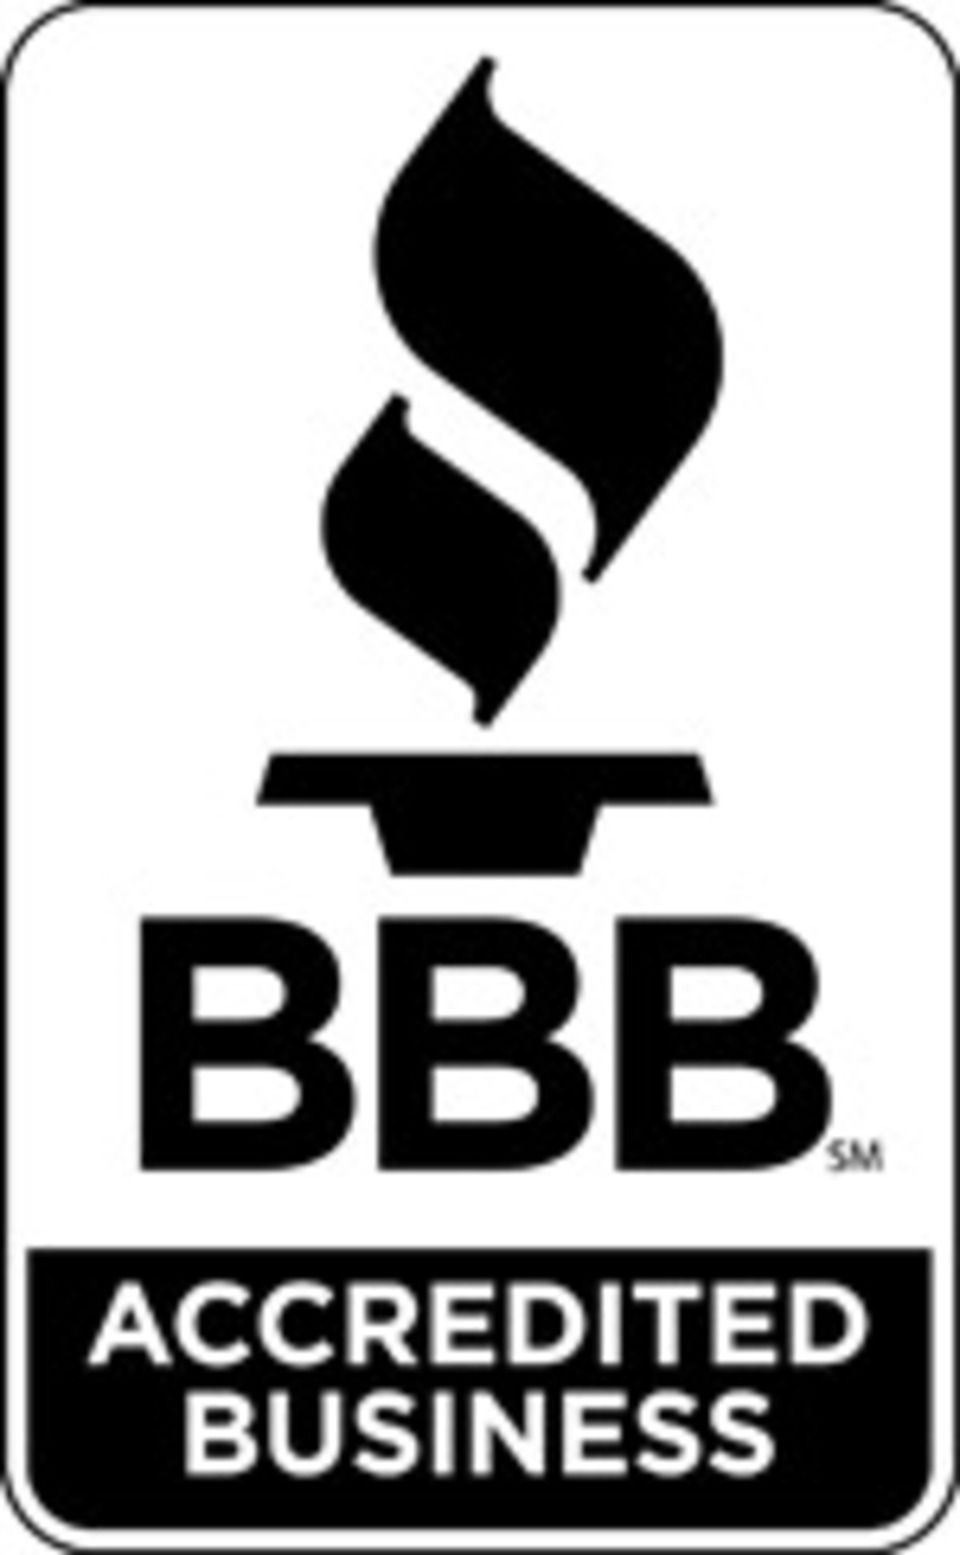 Betterbusinessbureao logo20130416 1095 1xlqg0x 0